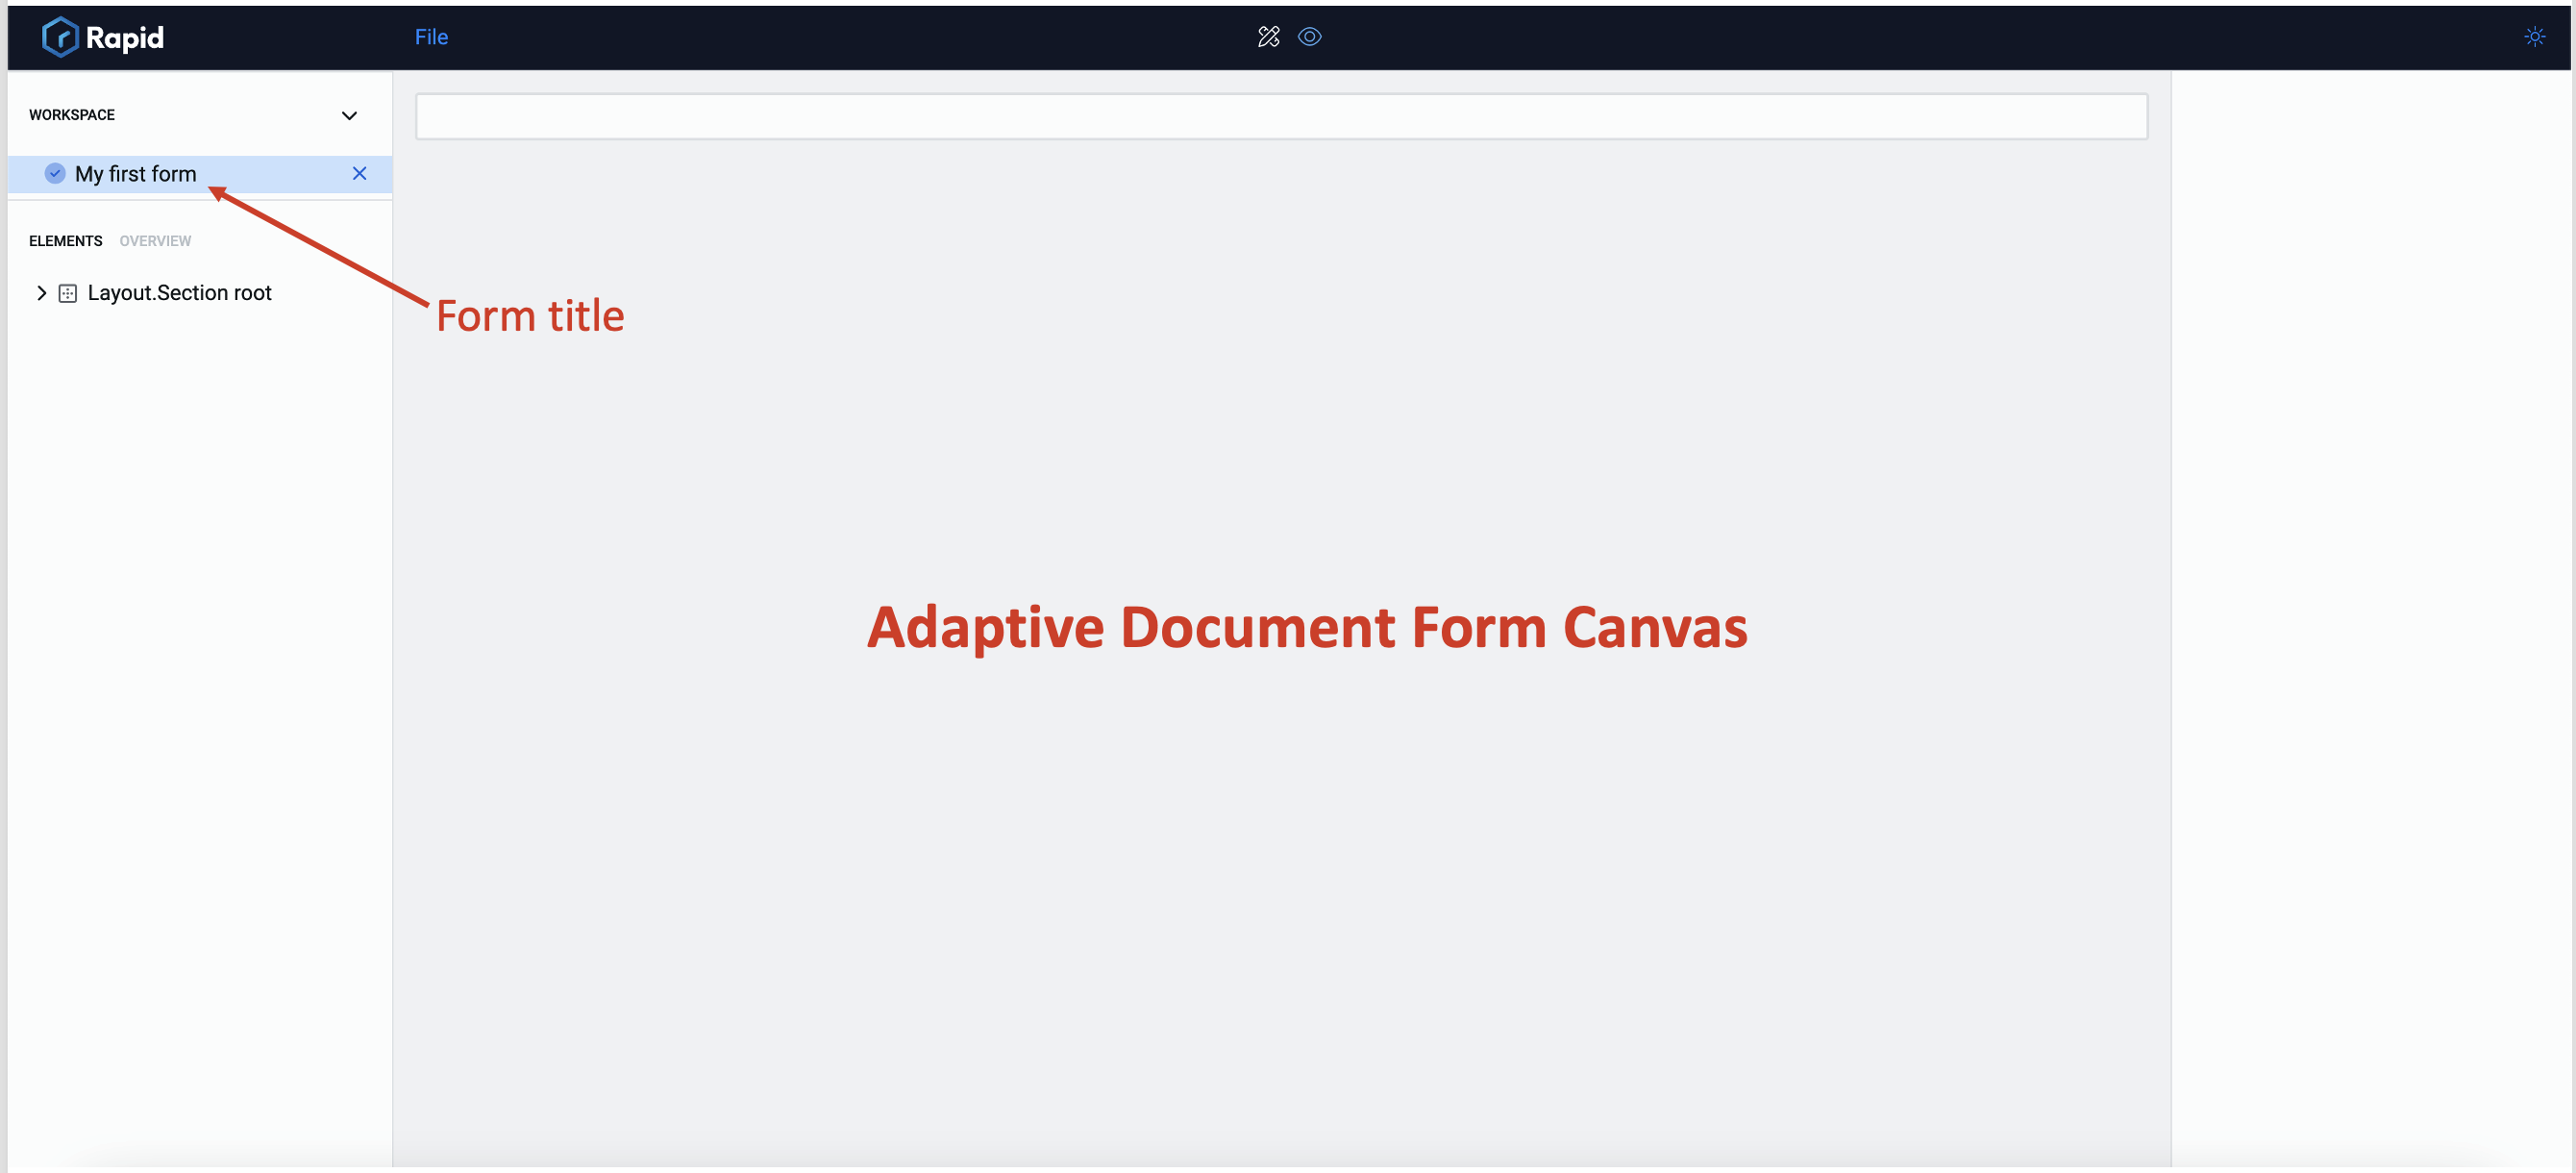 Image showing Adaptive Document Form created